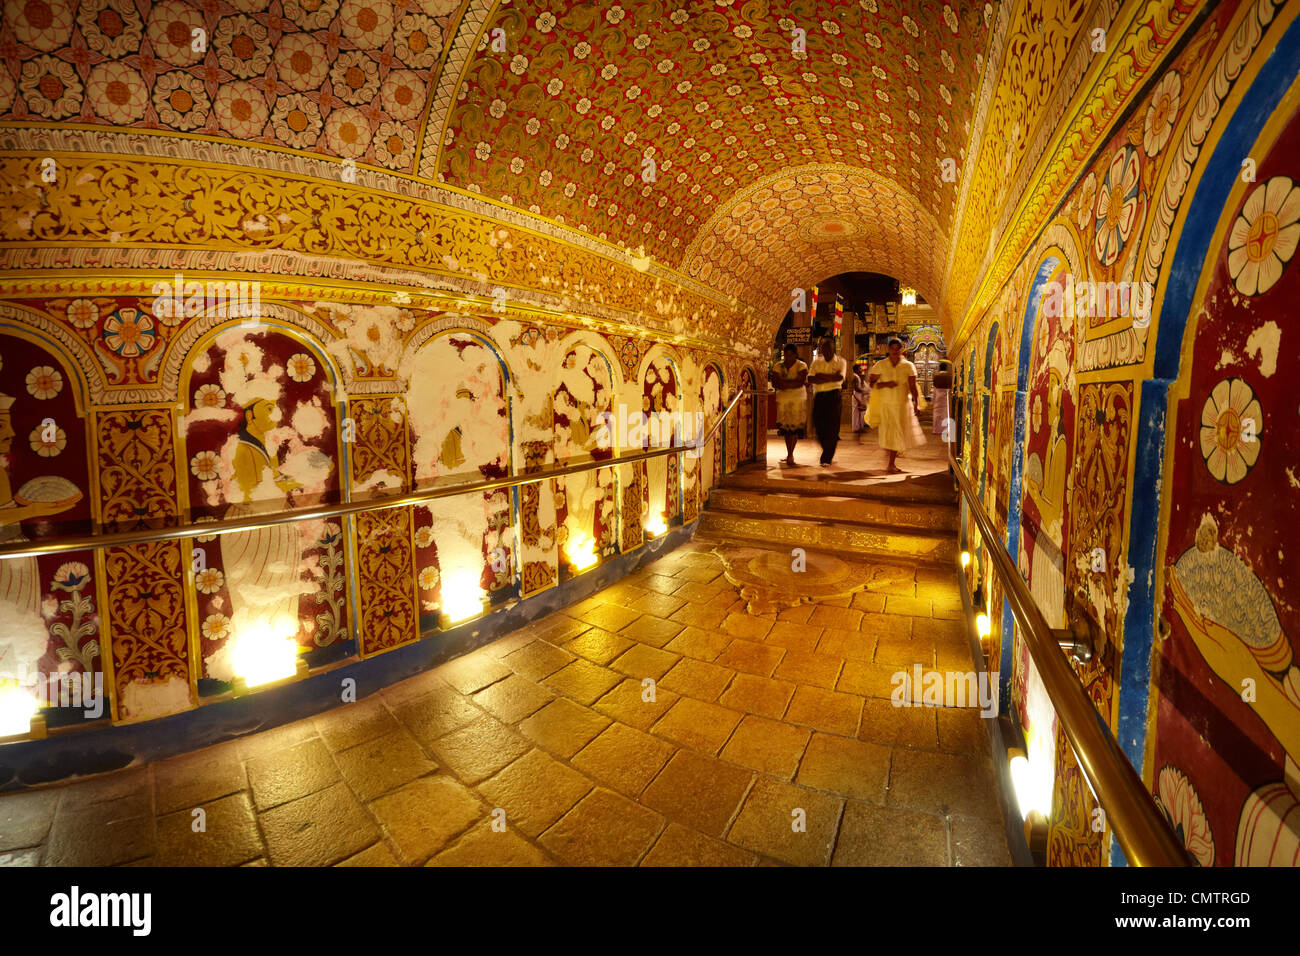 Sri Lanka - Temple de la dent, Kandy, Sri Dalada Maligawa, UNESCO World Heritage Site, sanctuaire bouddhiste Banque D'Images